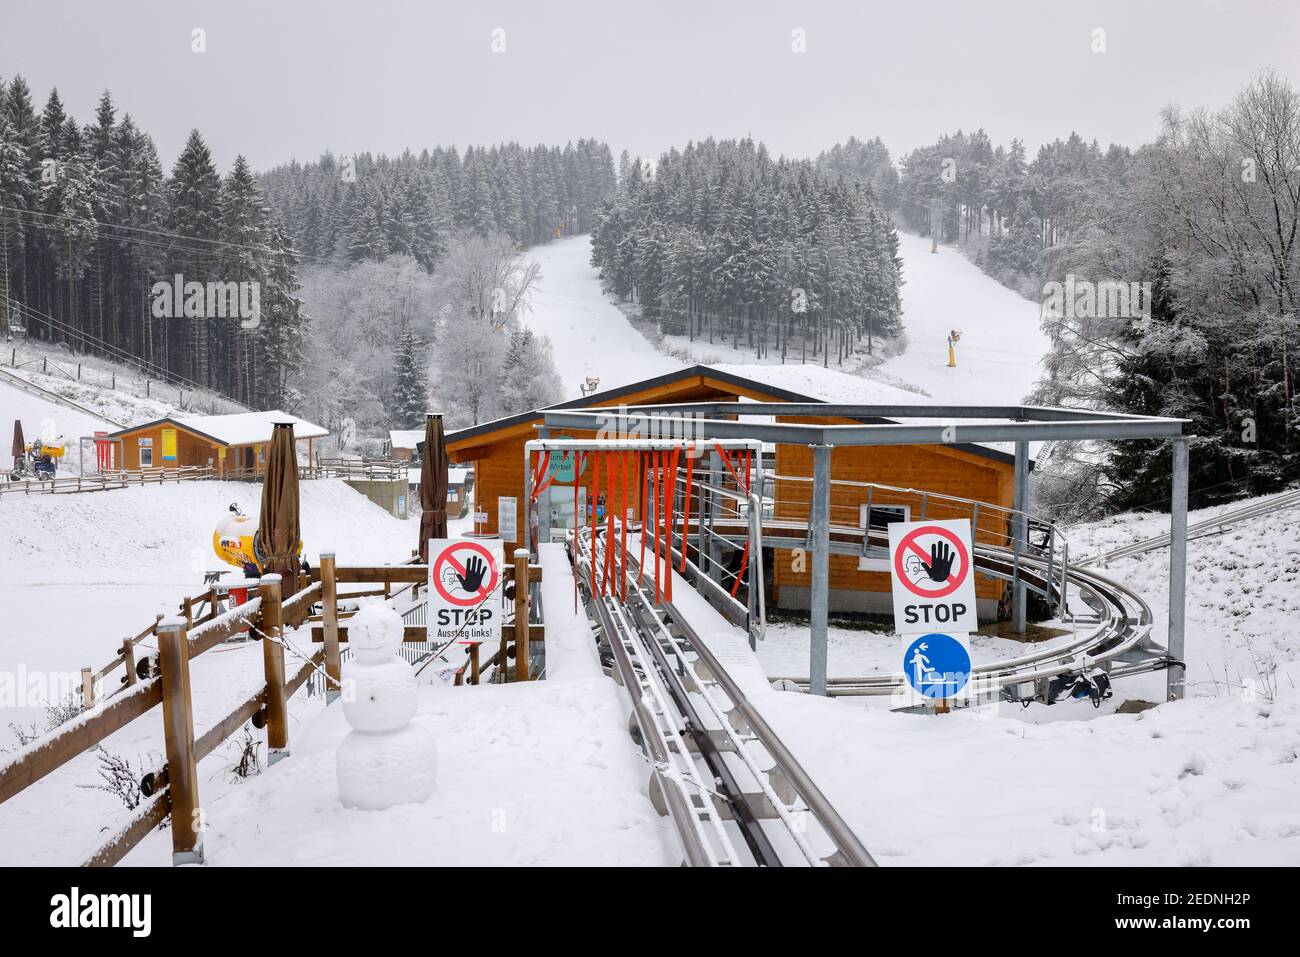 07.12.2020, Winterberg, North Rhine-Westphalia, Germany - Closed ski lift, ski carousel, no winter sports in Winterberg in times of Corona crisis at t Stock Photo